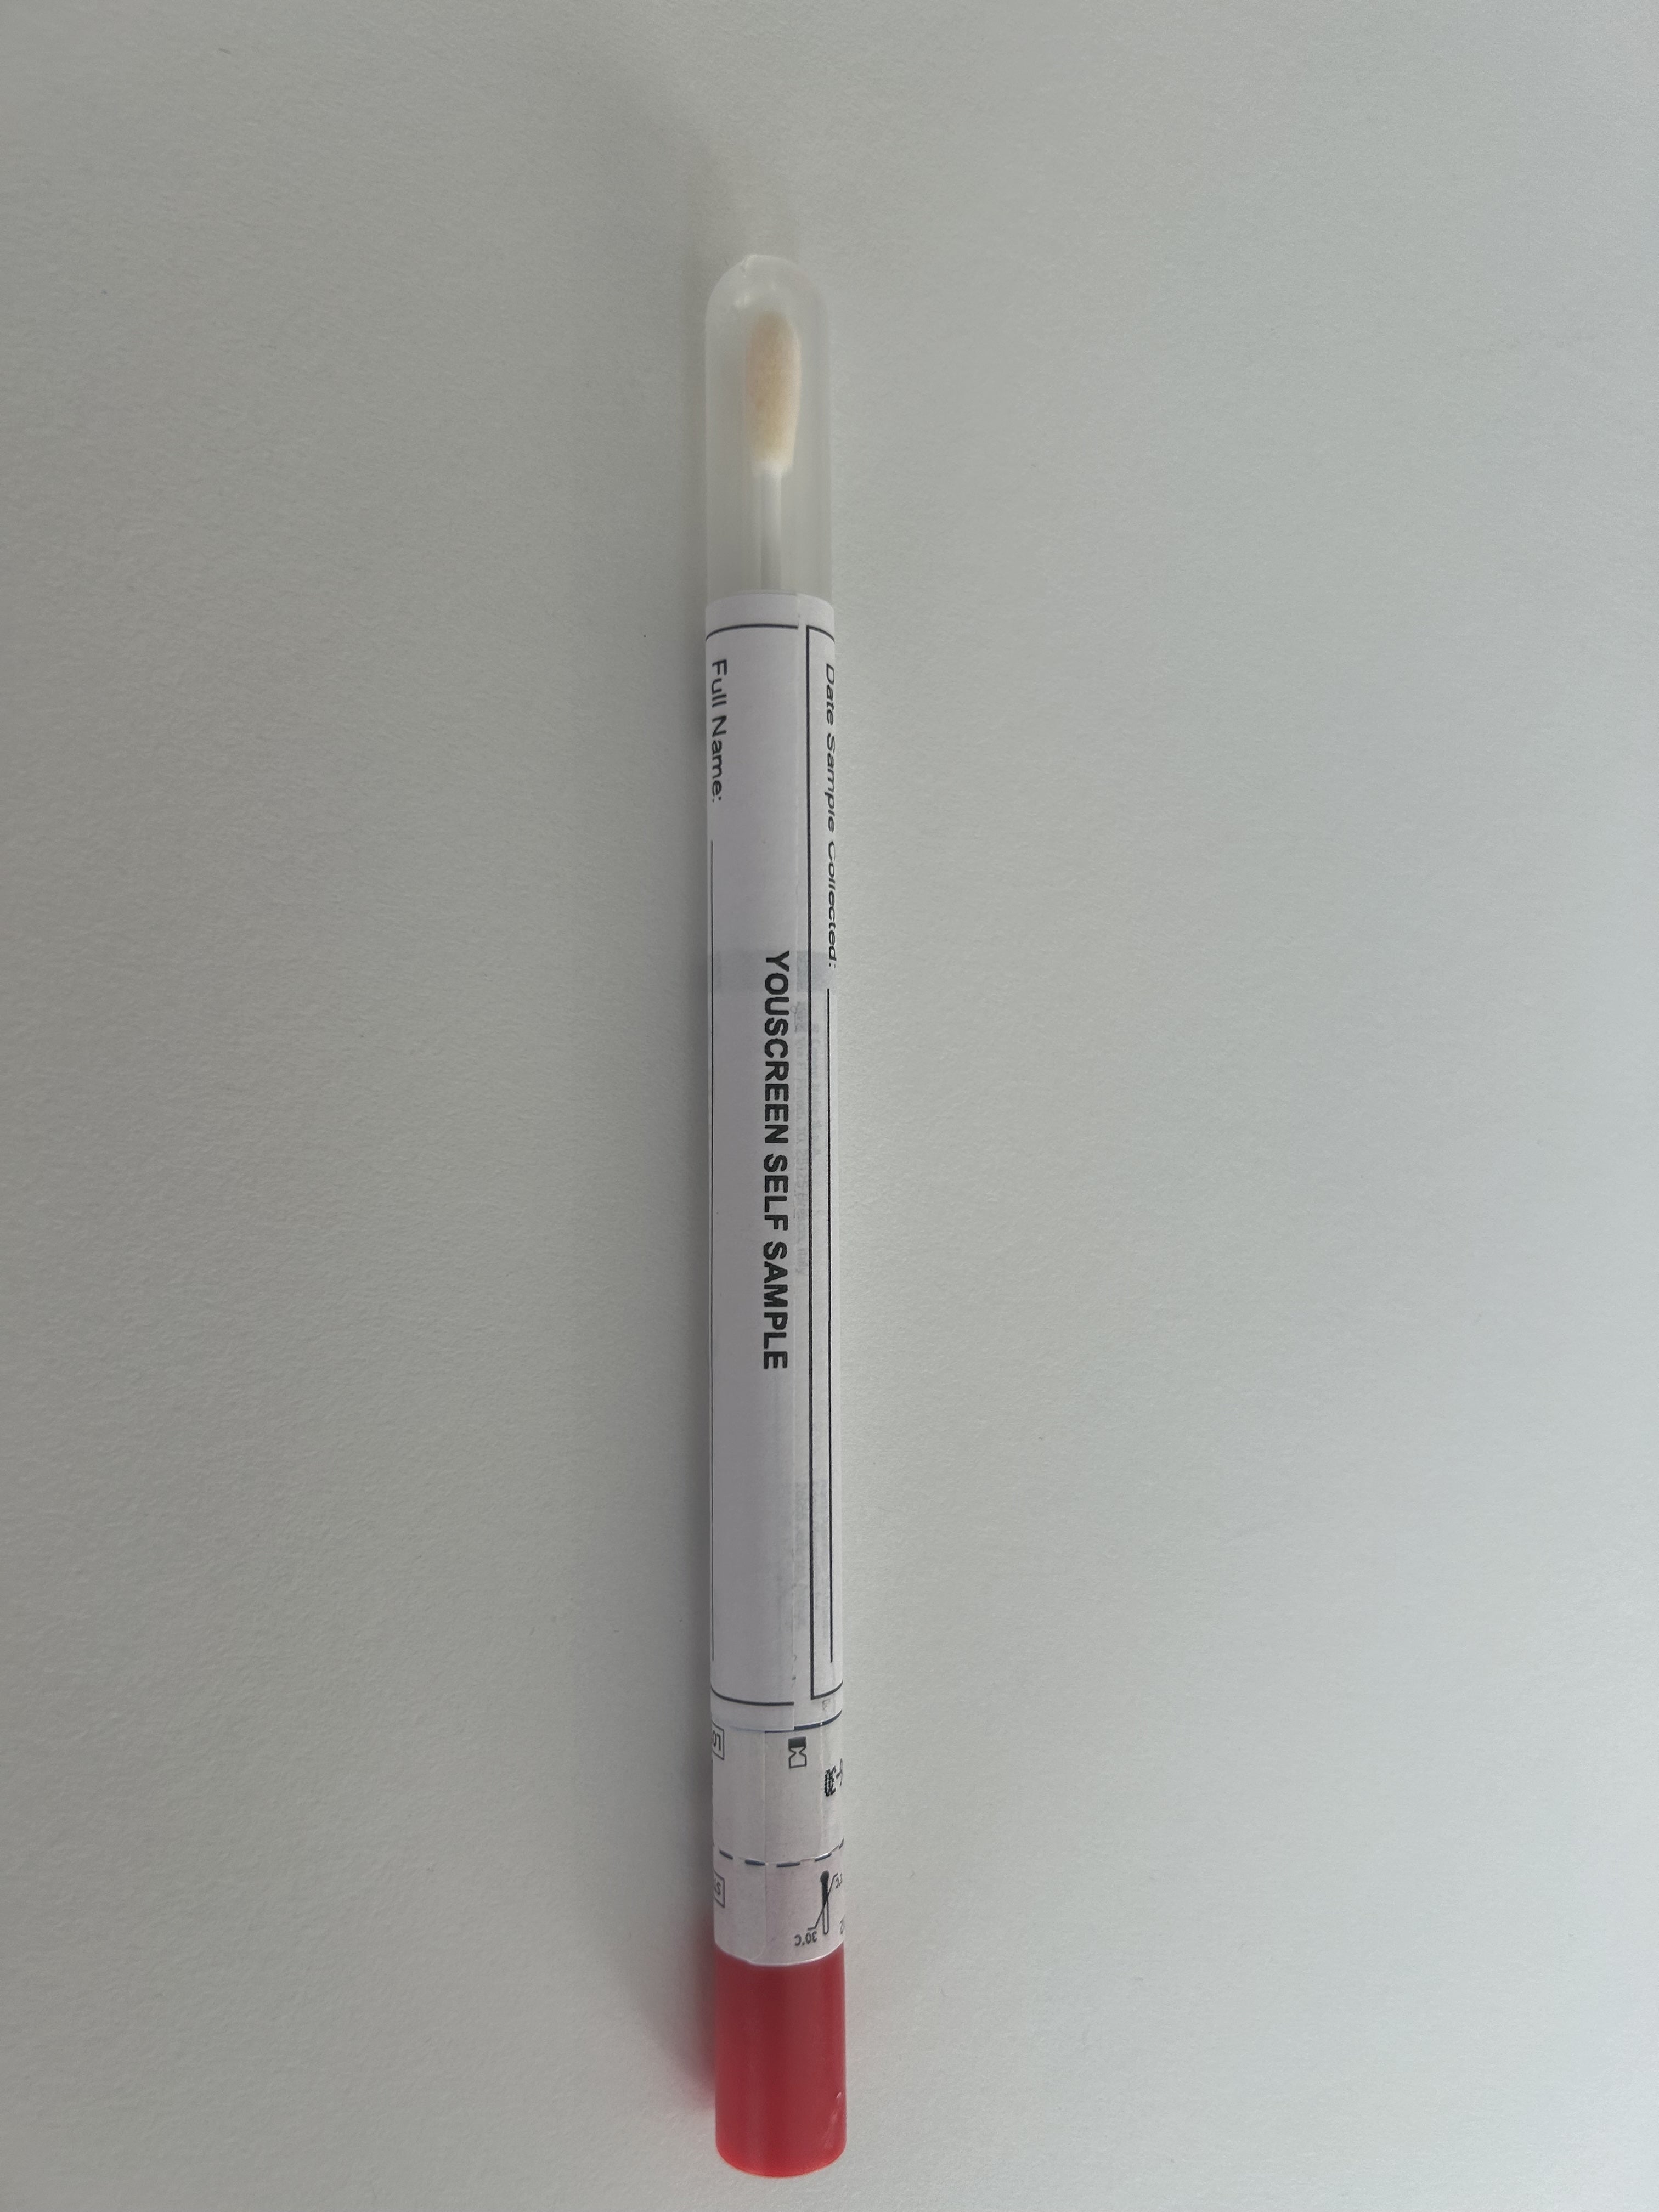 A YouScreen test tube (Kings College London/PA)